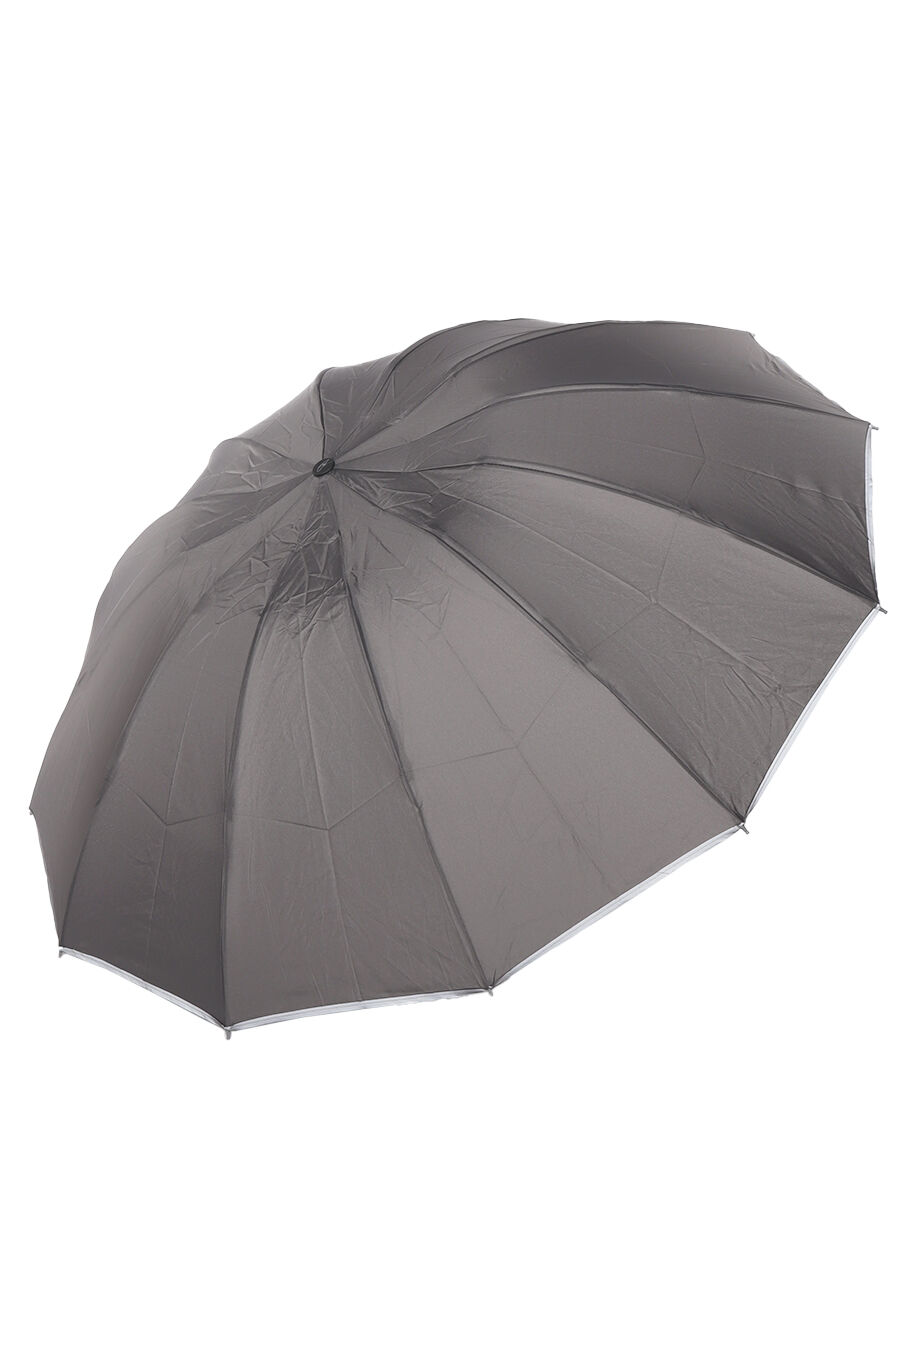 Зонт муж. Umbrella 6510-3 полный автомат (т.серый)